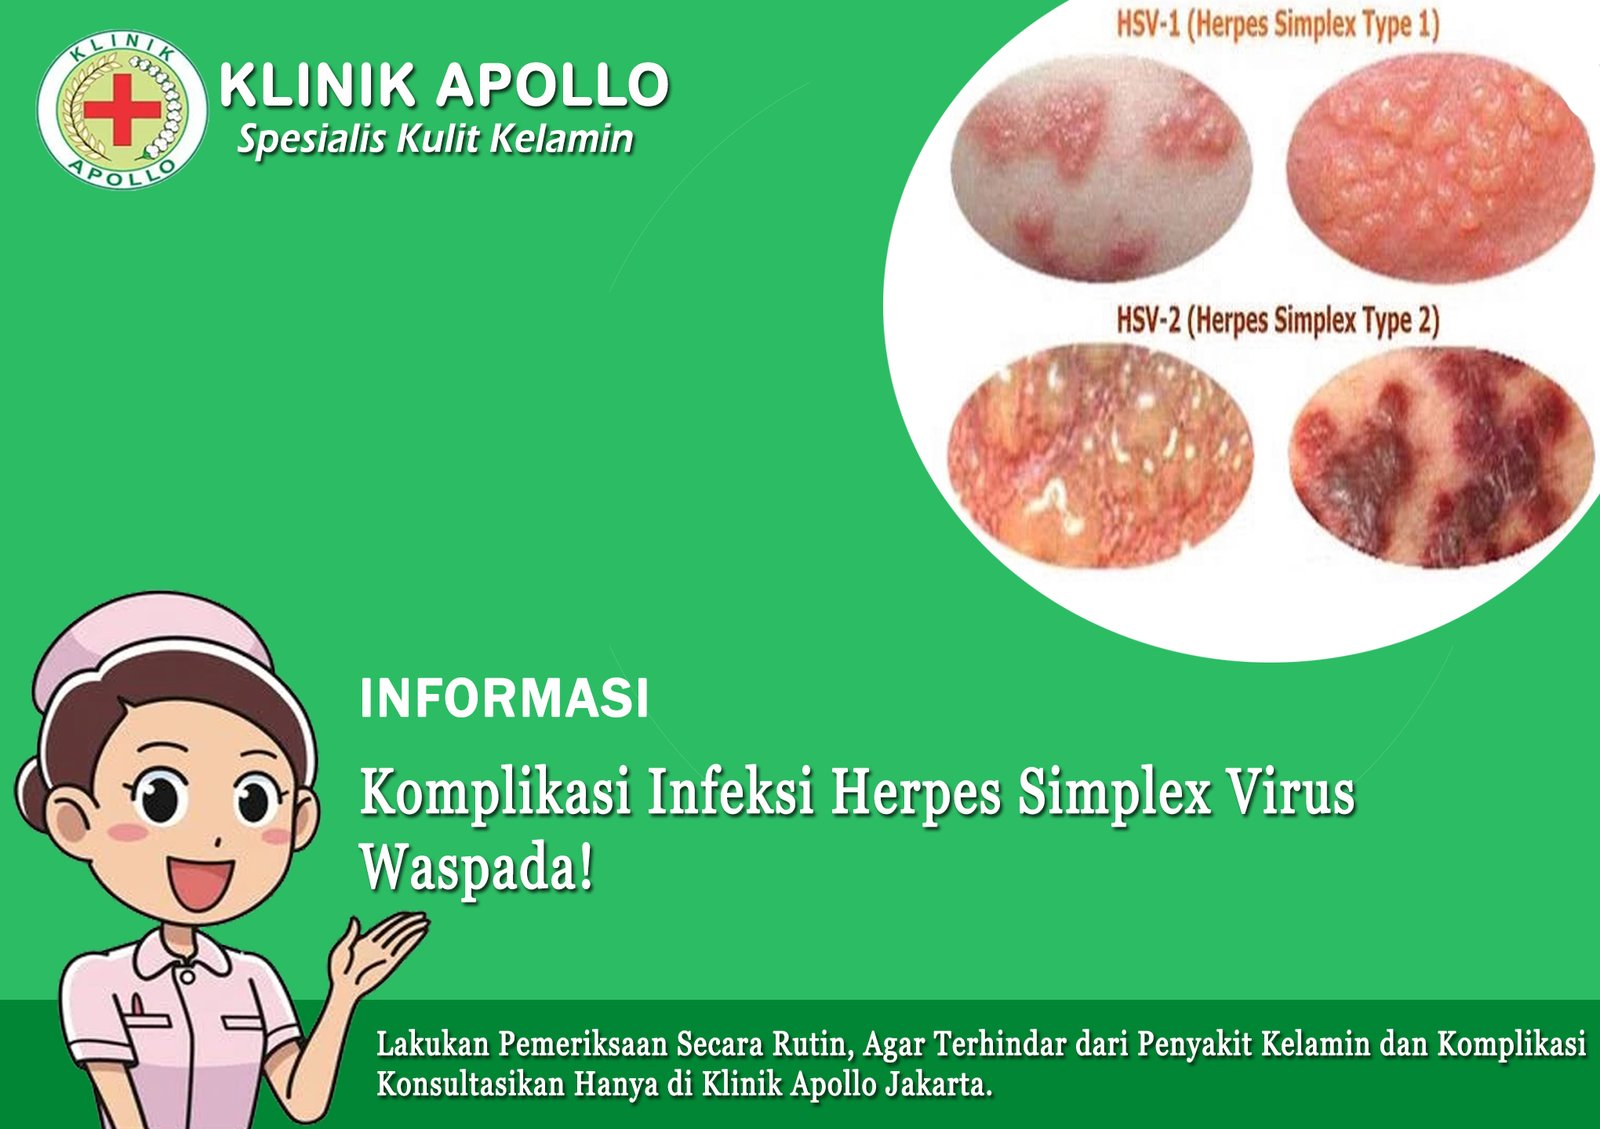 Komplikasi Infeksi Herpes Simplex Virus, Waspada!